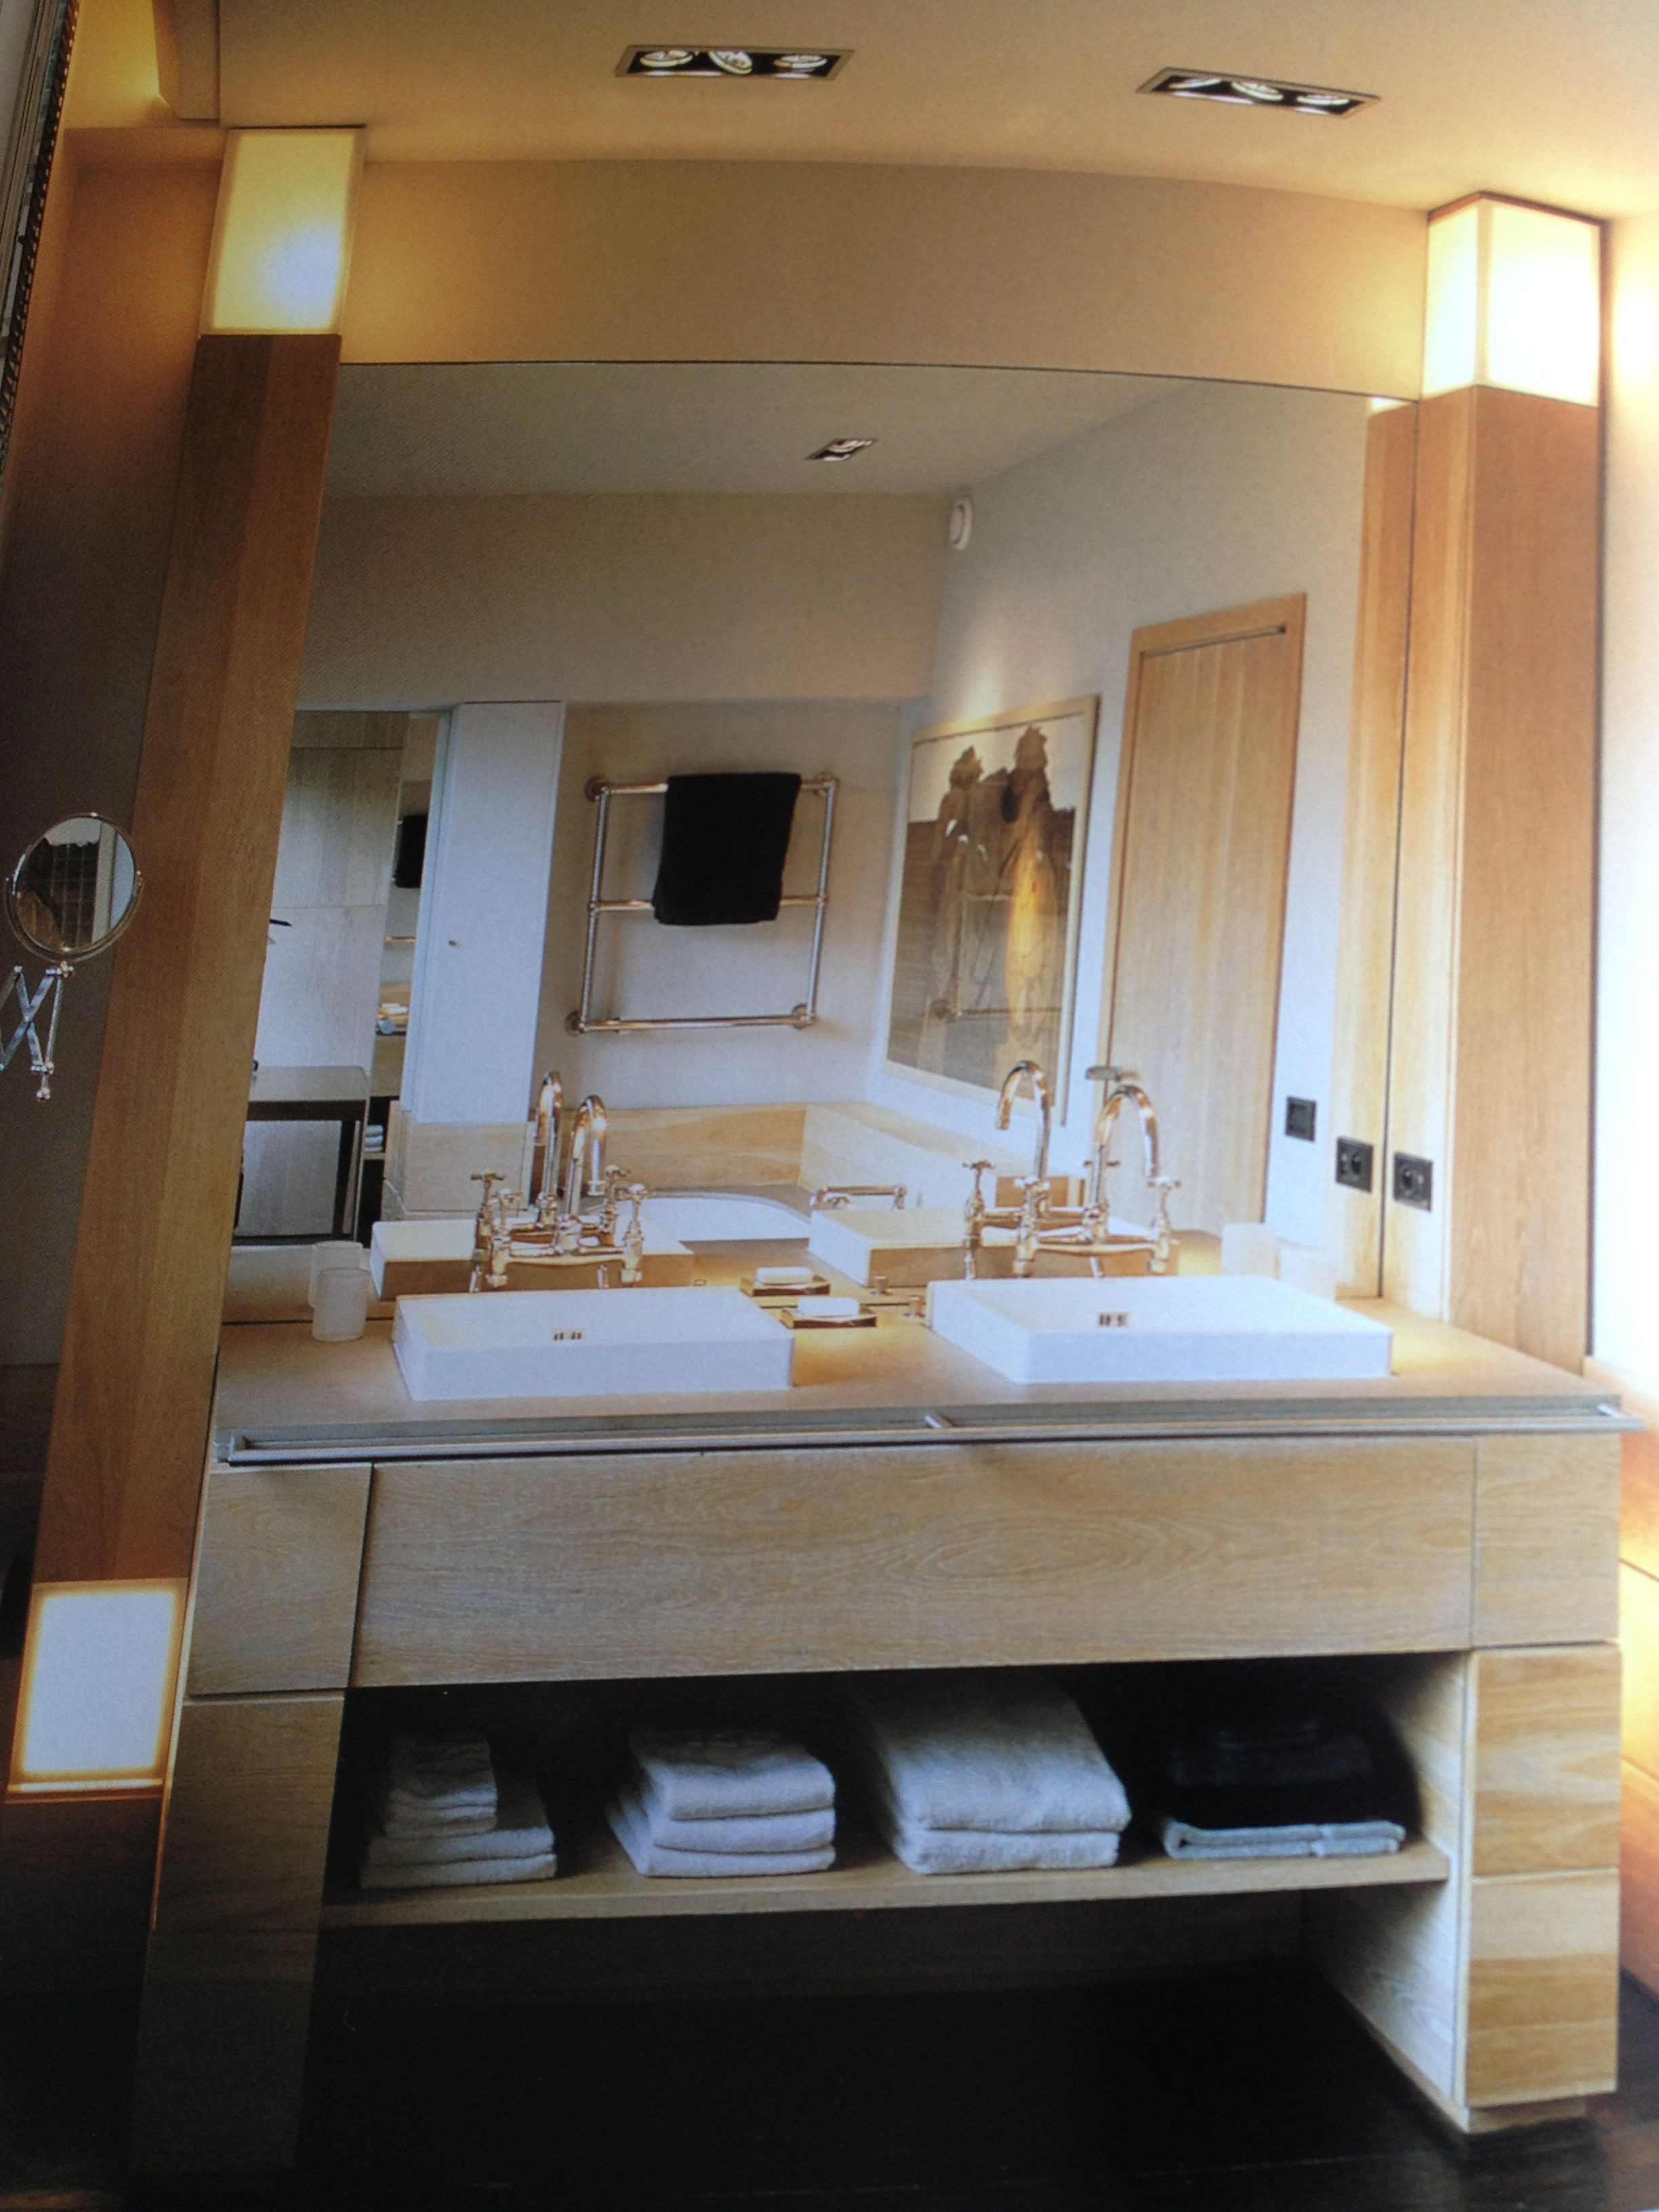 Best ideas about Pinterest Bathroom Remodel
. Save or Pin Bathroom Design Ideas Pinterest bathroom design ideas Now.